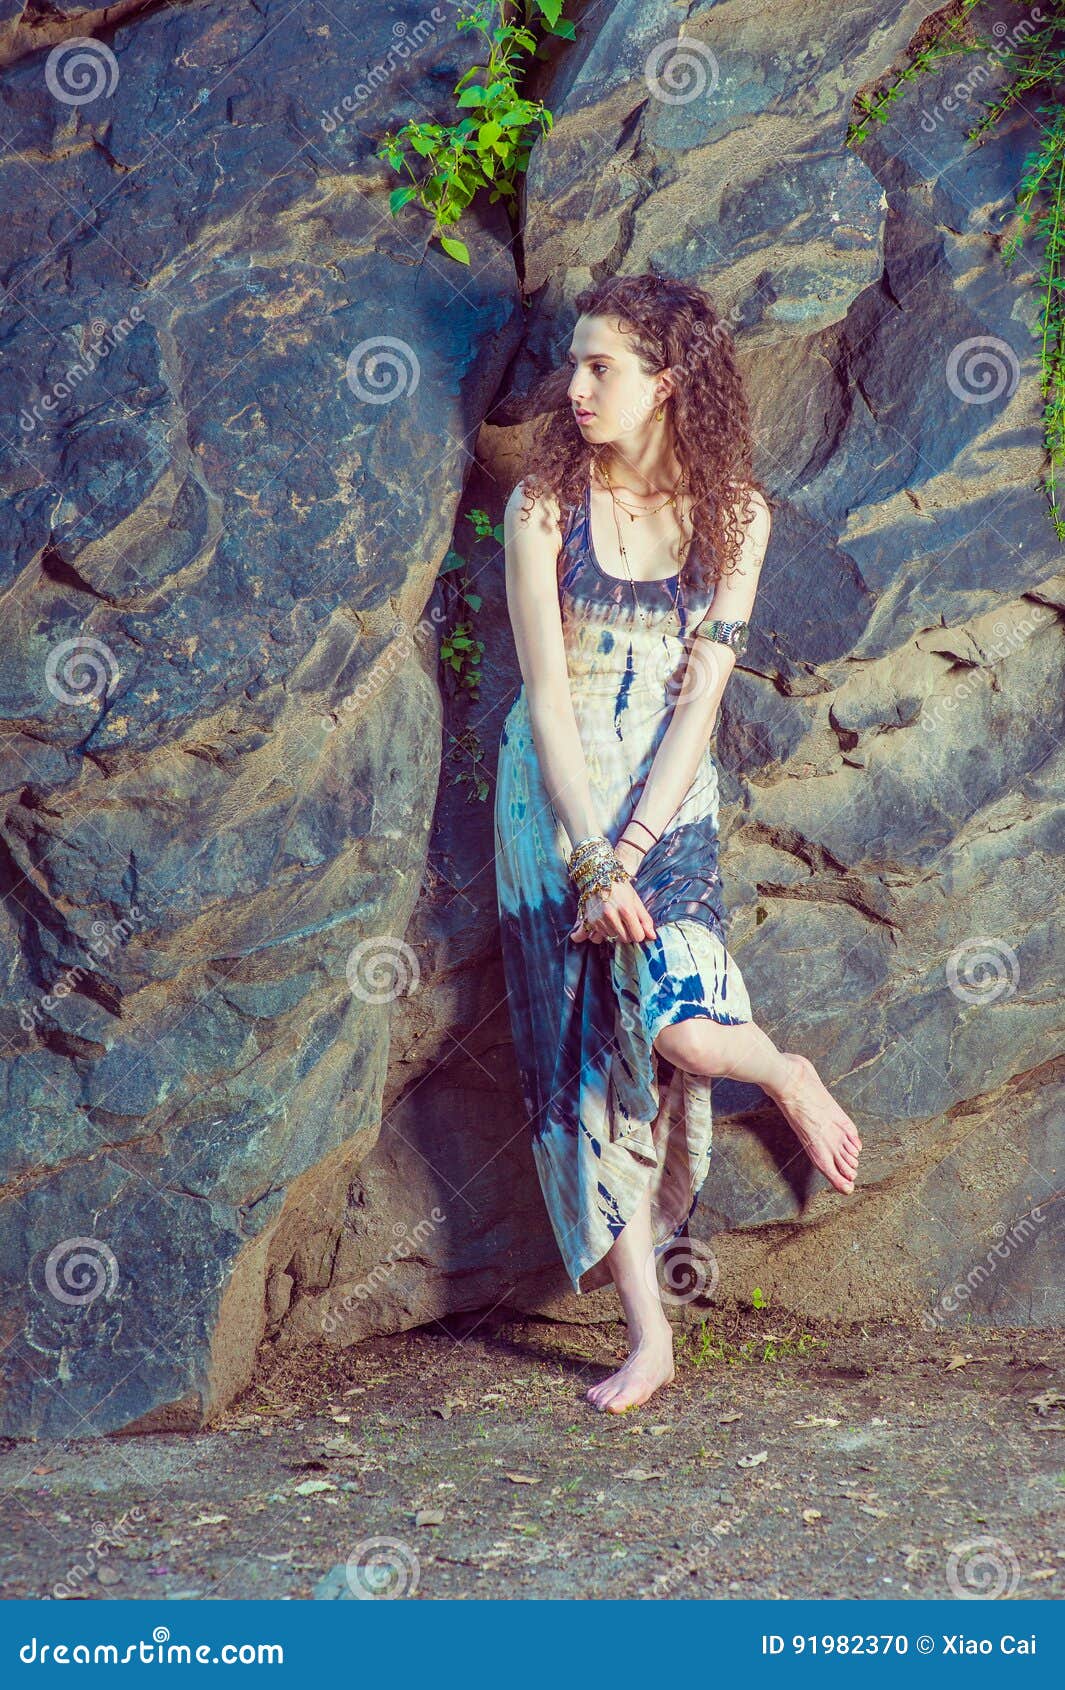 https://thumbs.dreamstime.com/z/american-teenage-girl-summer-fashion-new-york-curly-long-hair-bare-feet-wearing-patterned-long-dress-chunky-chain-bracelet-91982370.jpg